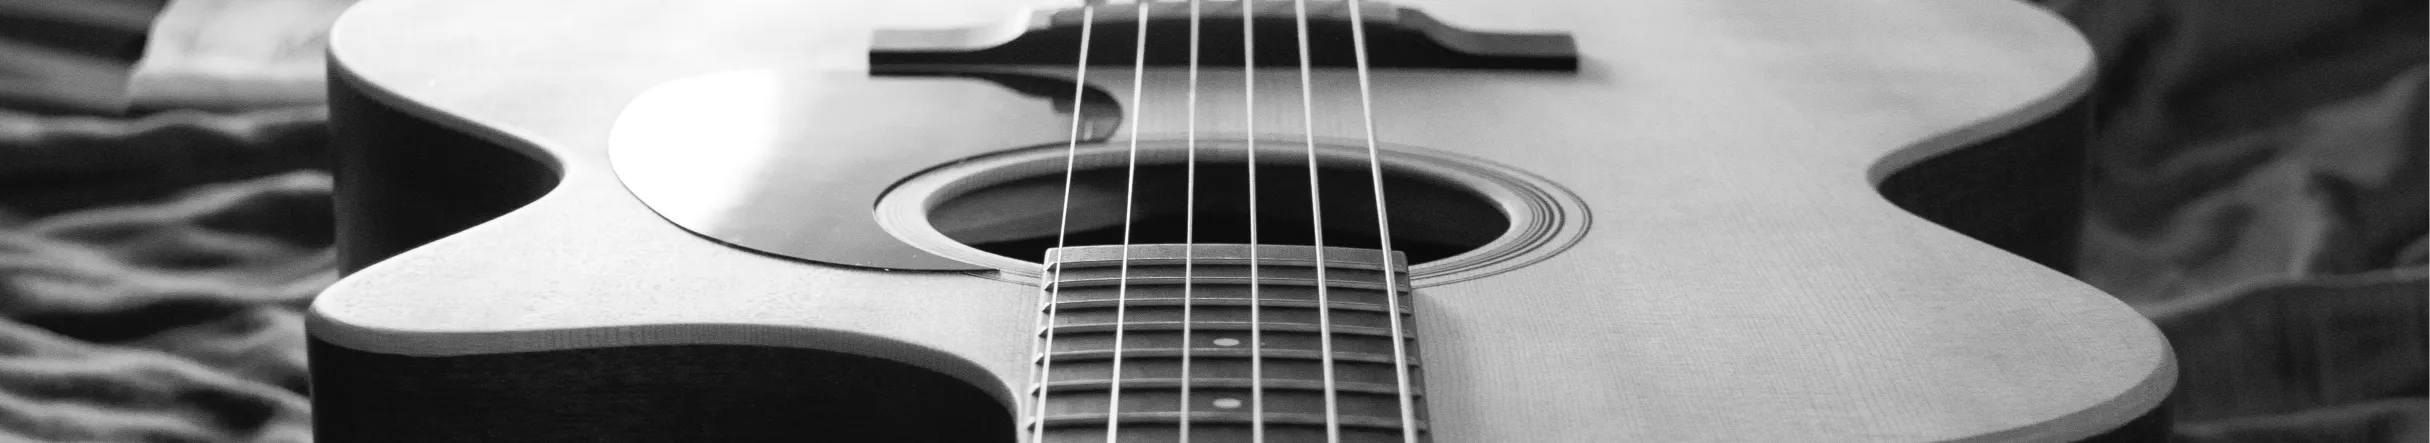 Guitaralize Acoustic Guitar Banner